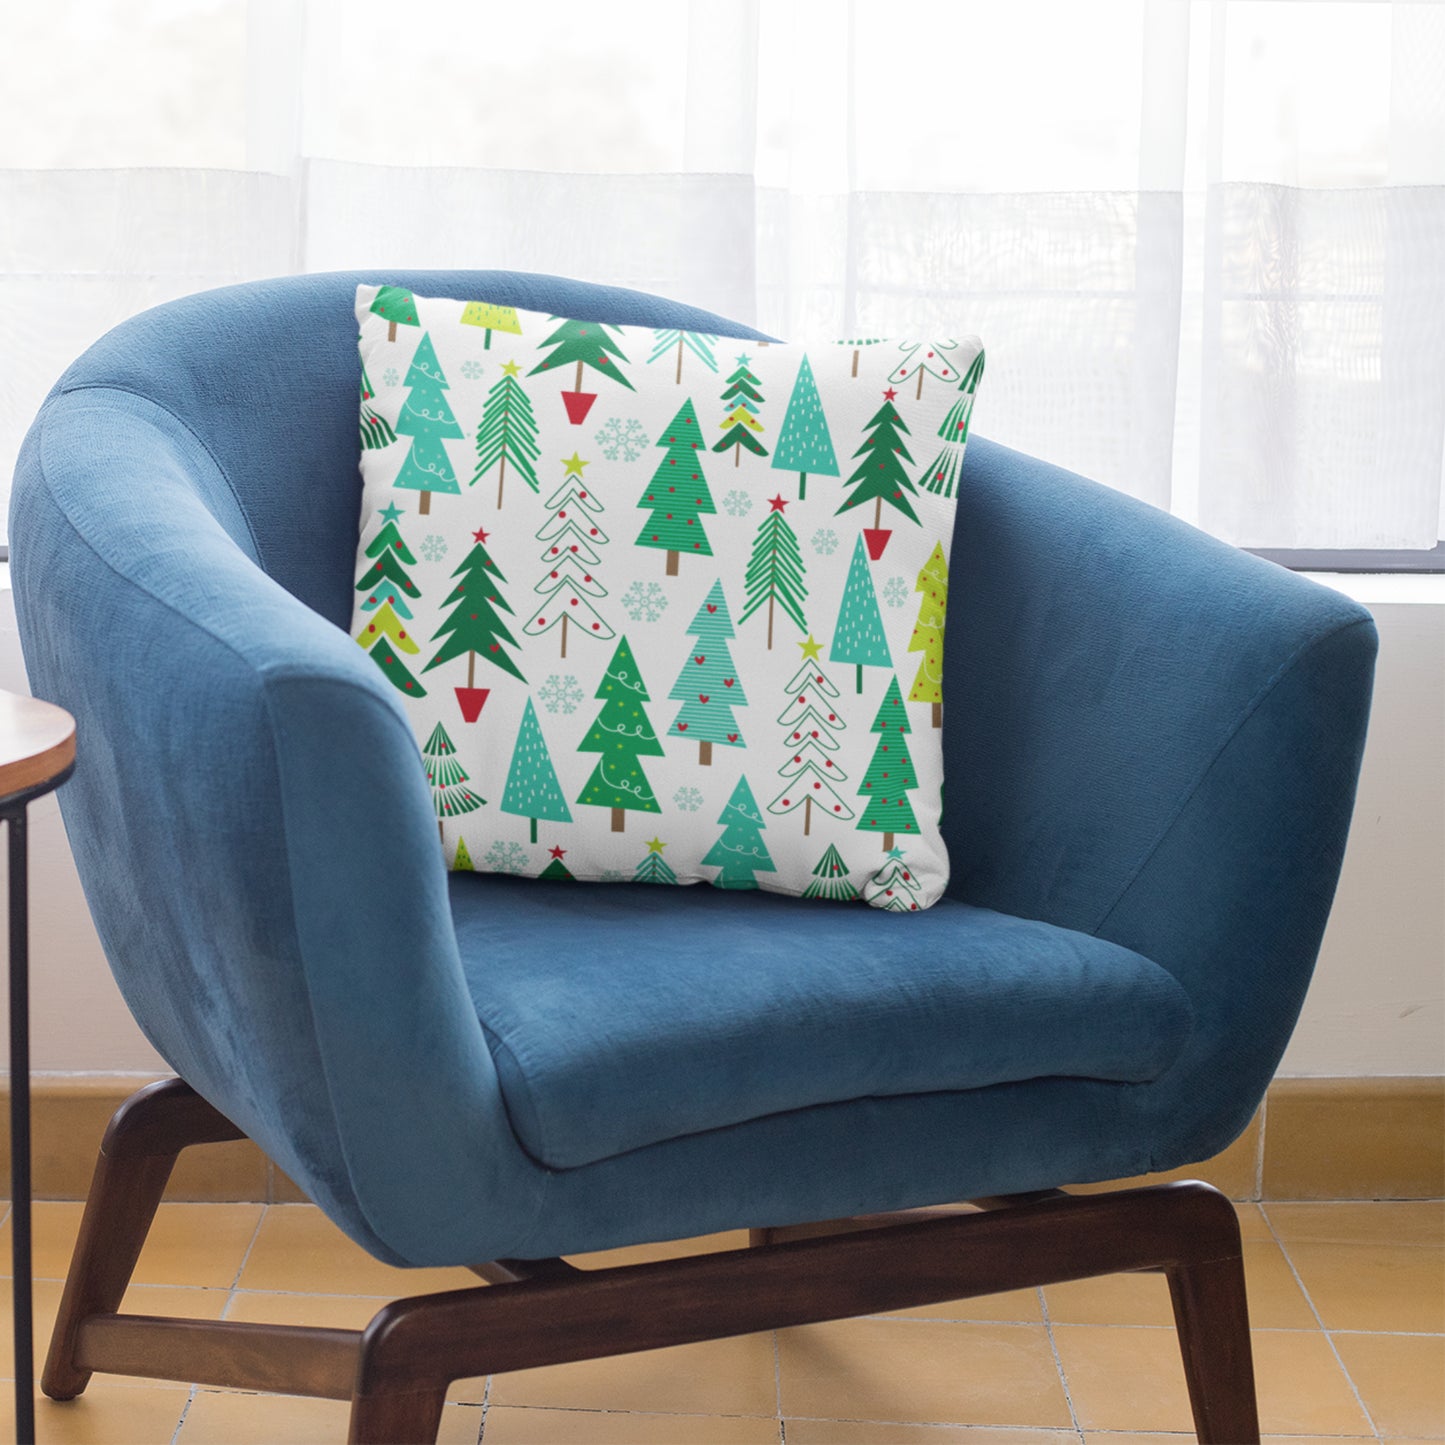 Christmas Theme Decorative Pillow for Home